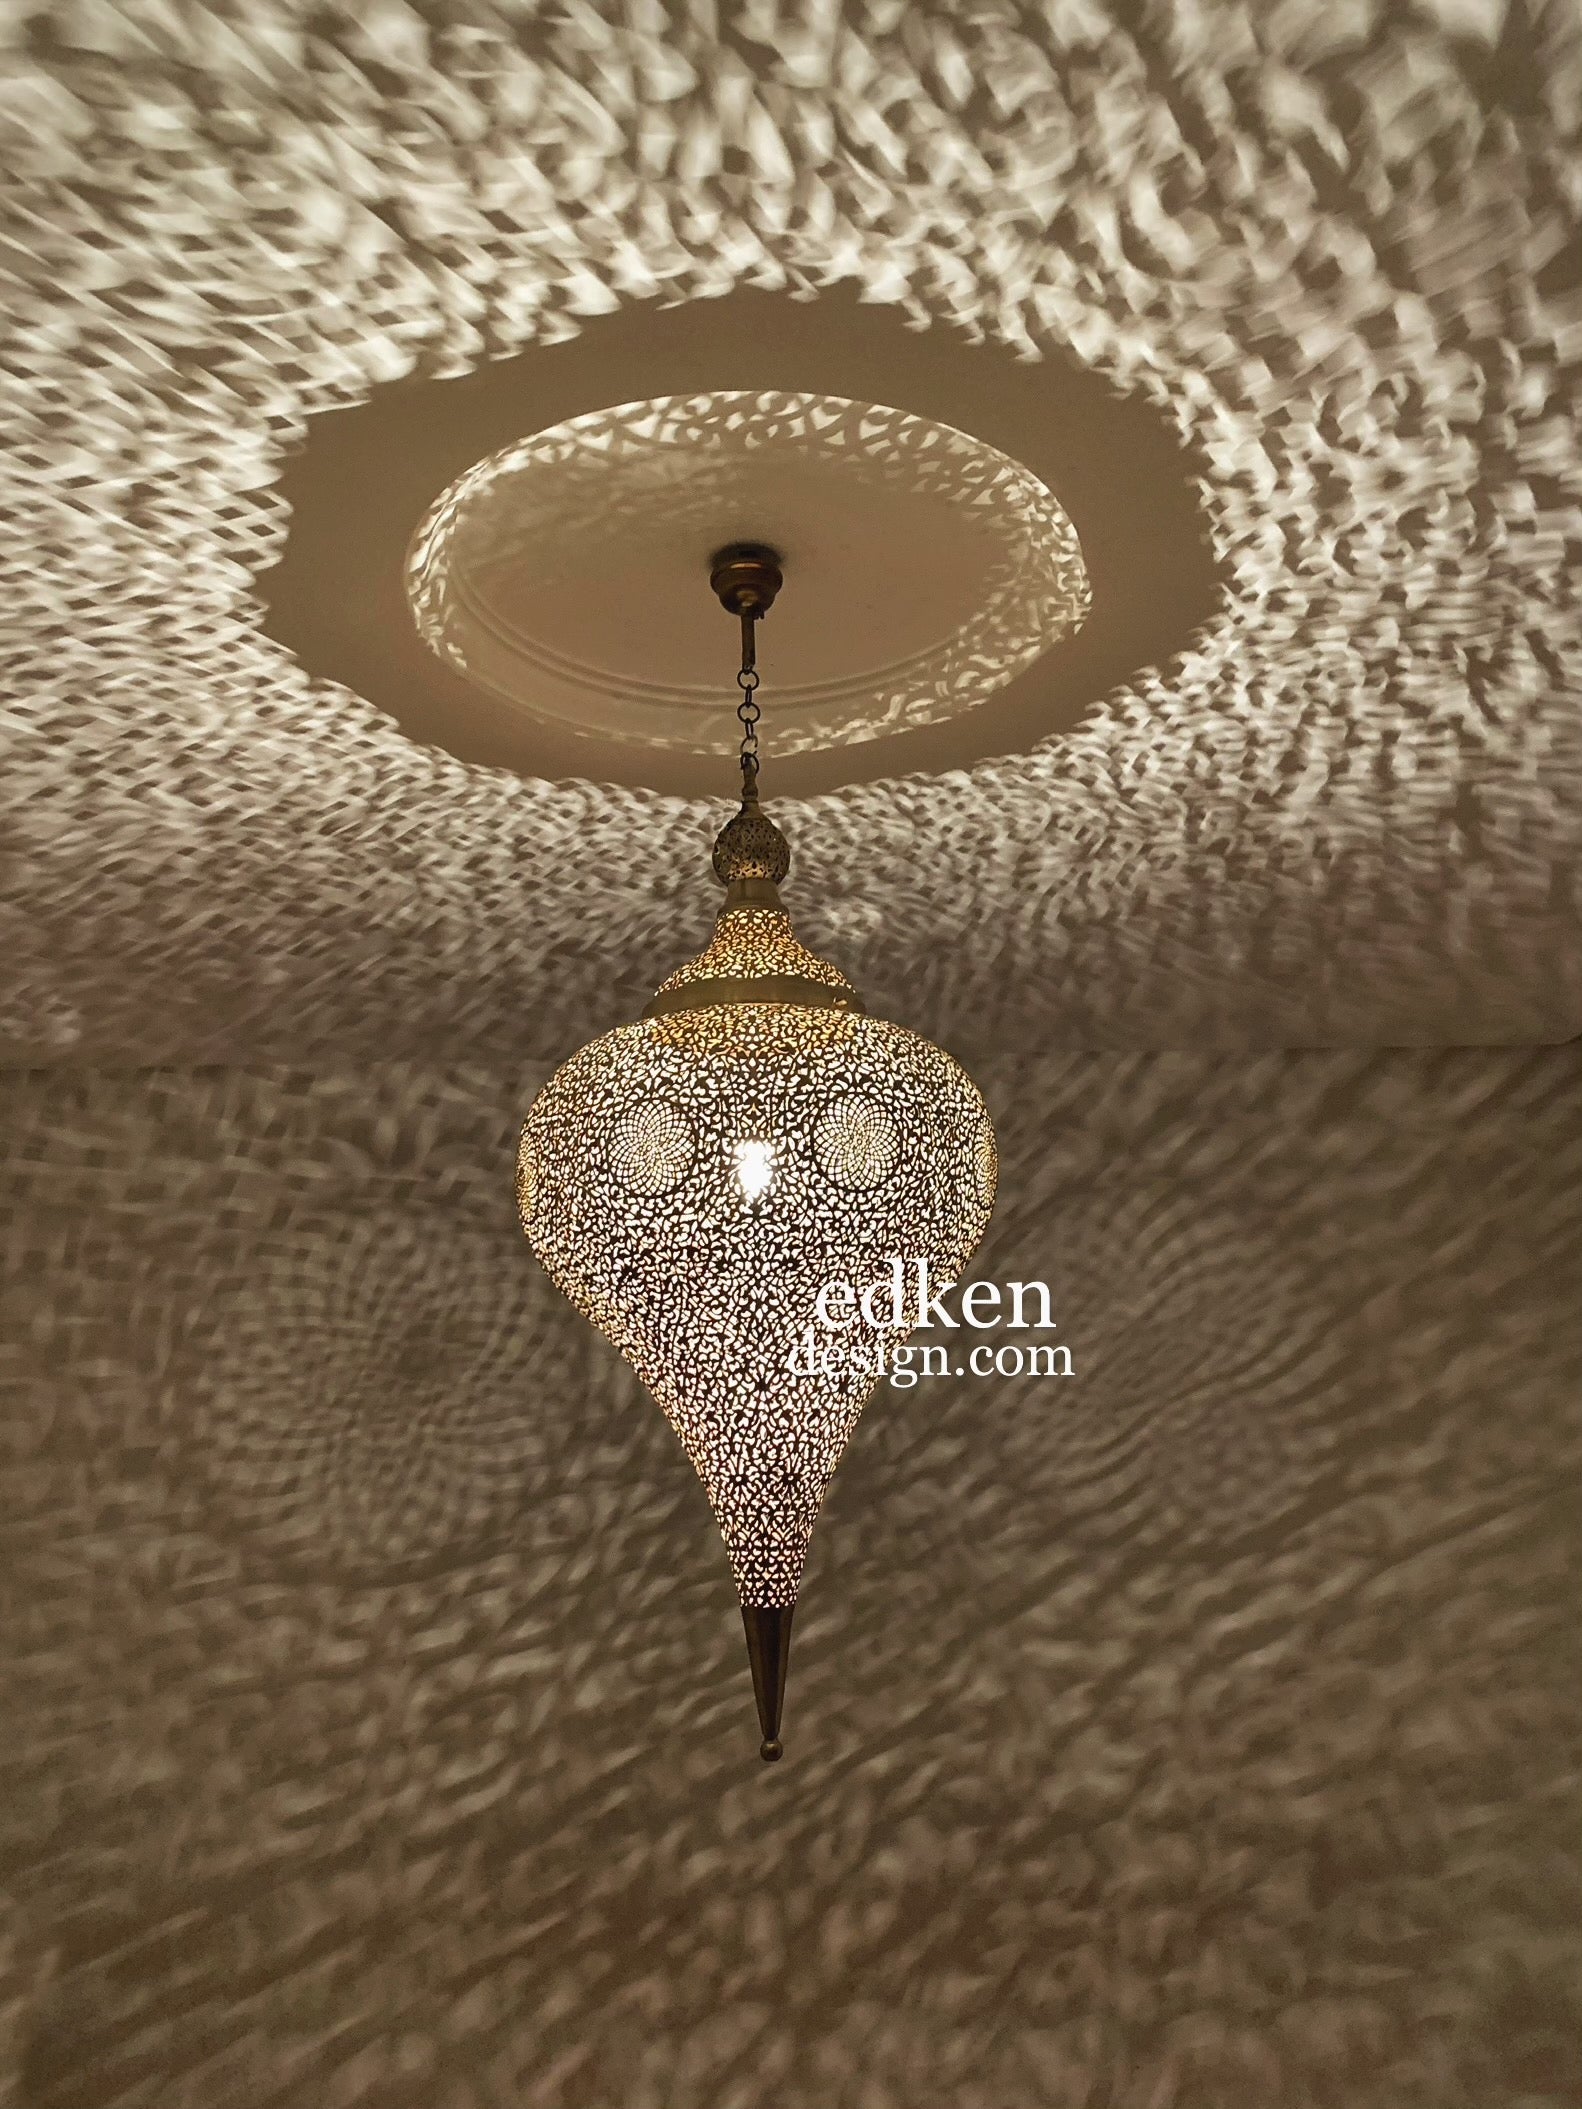 EDKEN LIGHTS - Morocco Ceiling Lamp Shades Fixture Tear Shape On